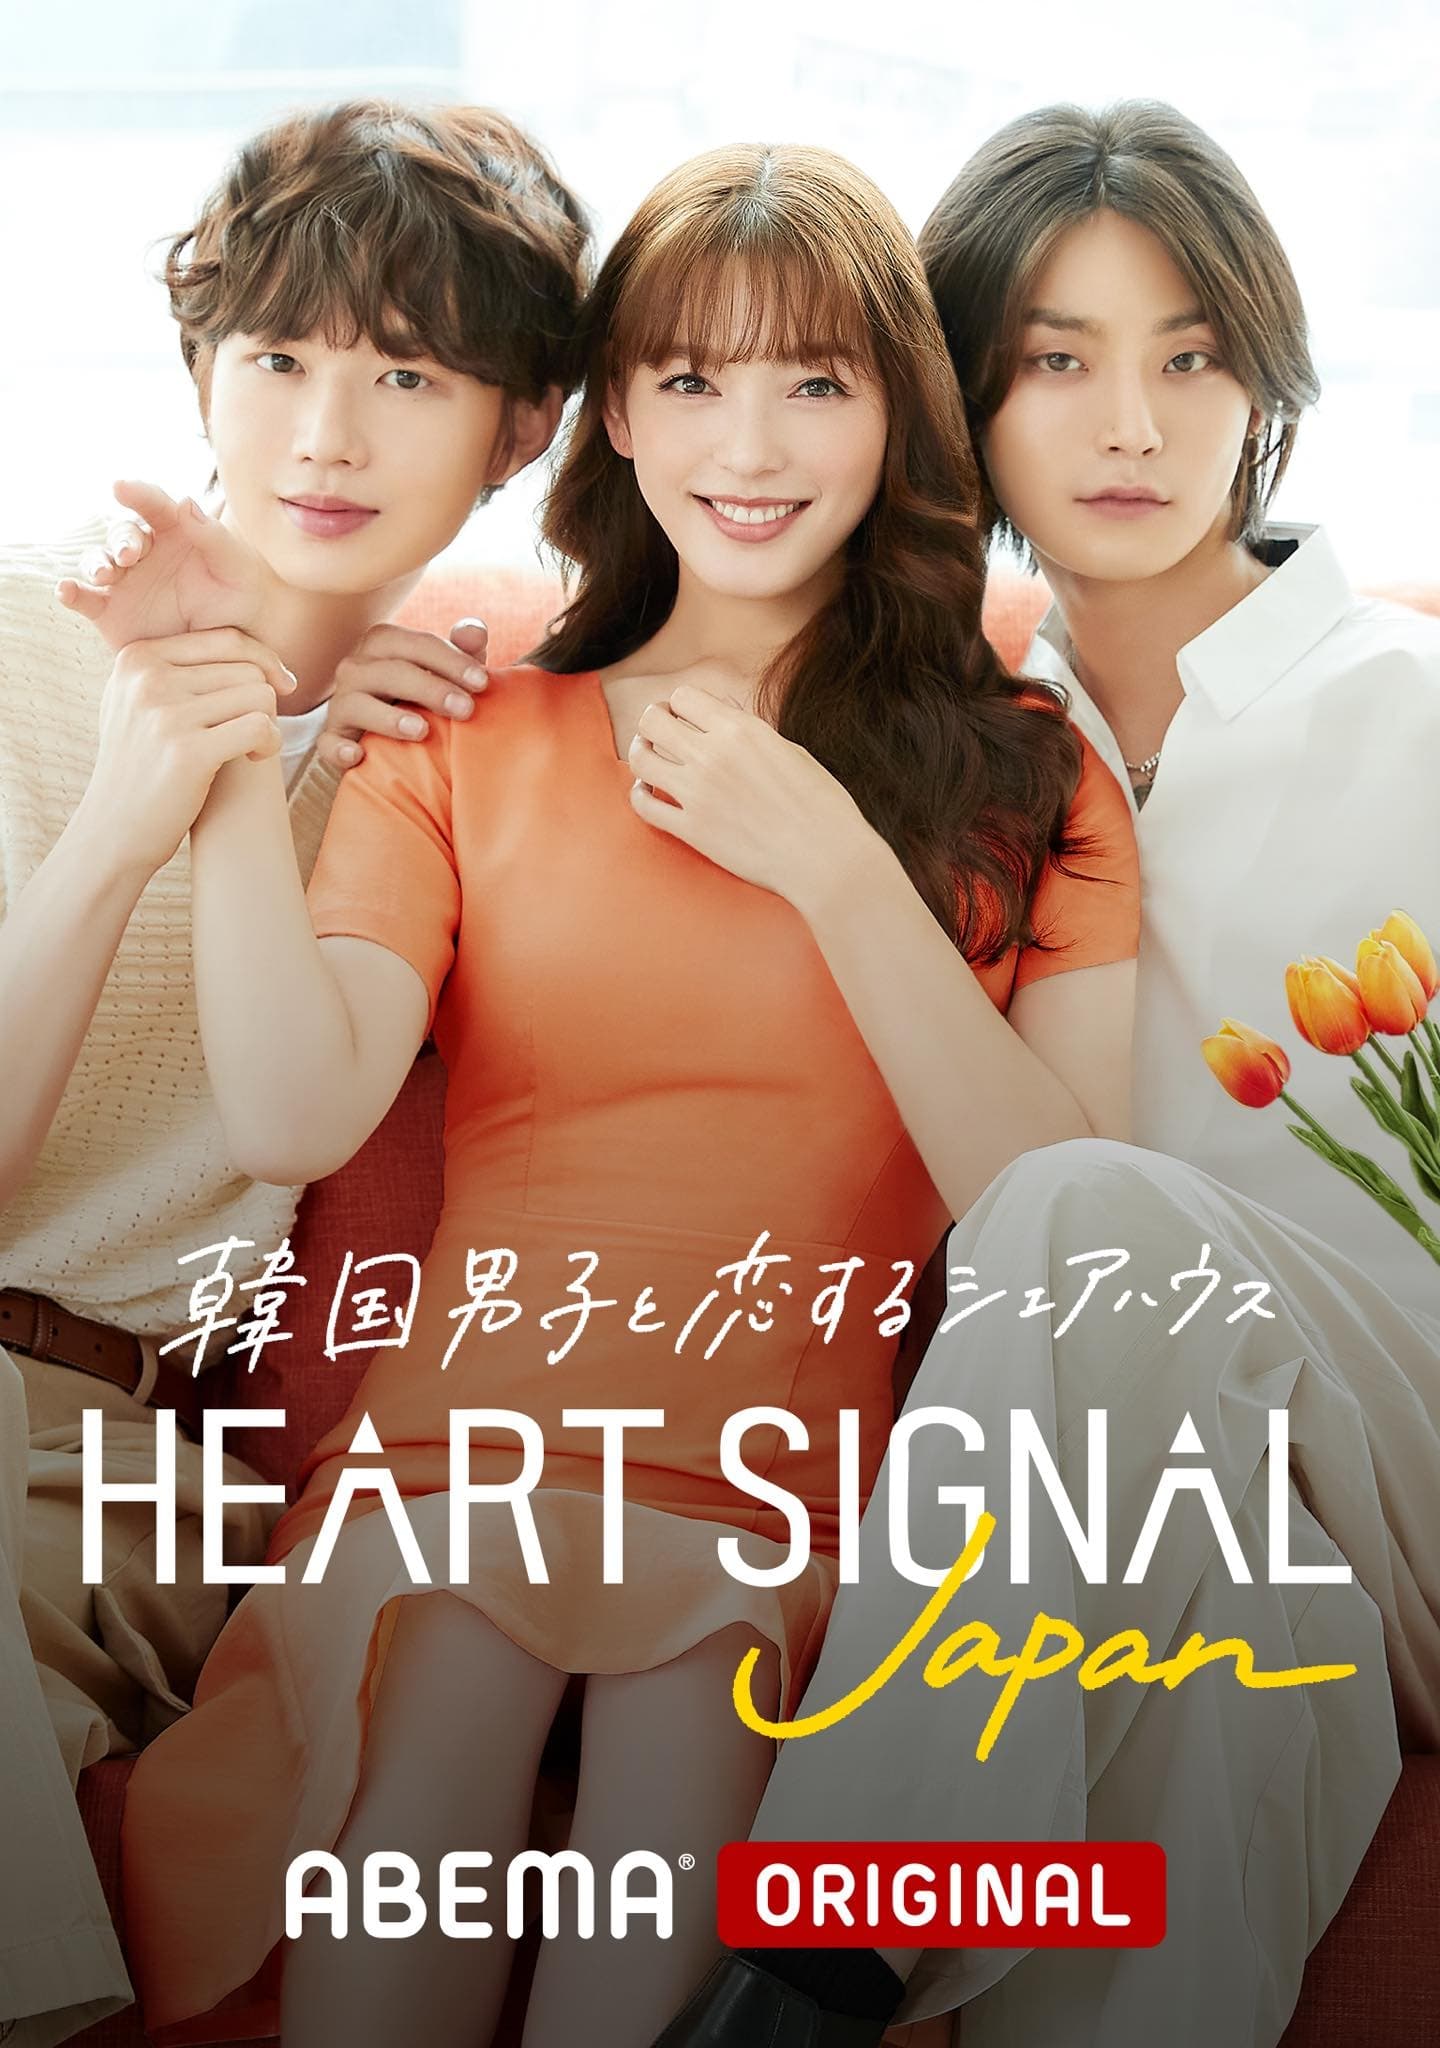 TV ratings for Heart Signal Japan in Ireland. AbemaTV TV series